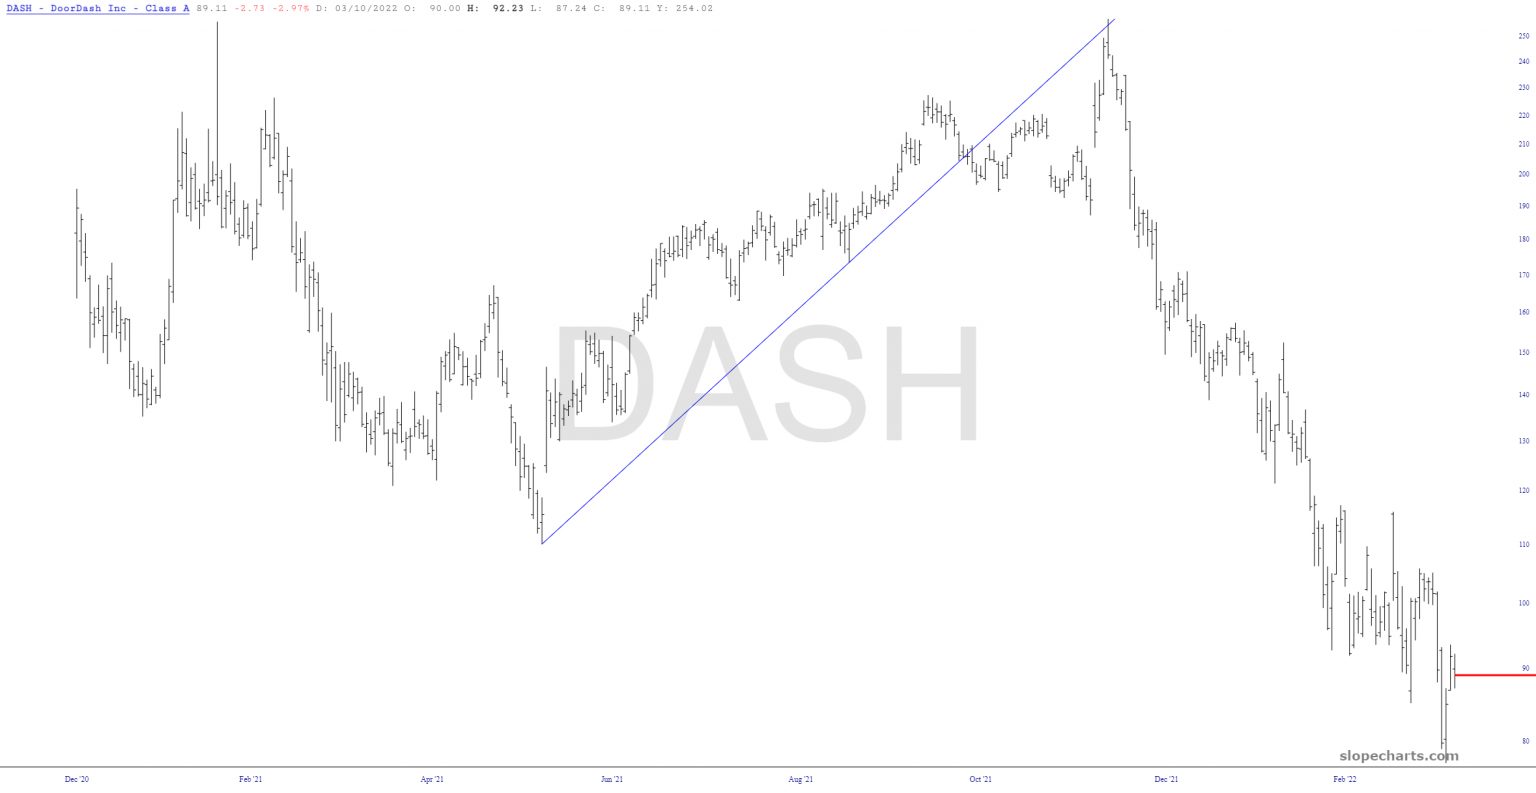 Long-Term DASH Chart.